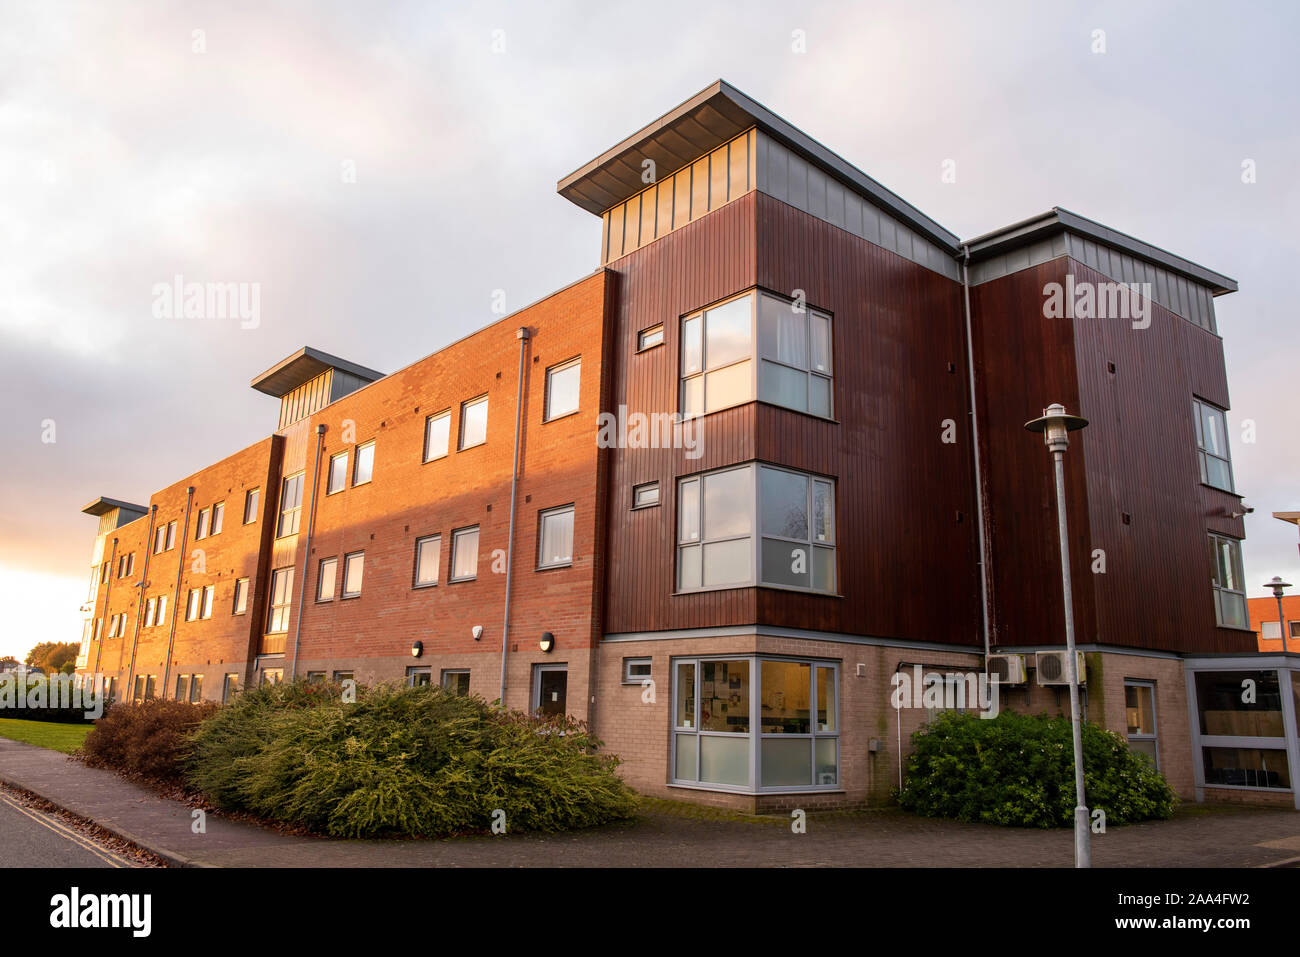 Halls of Residence at the Sutton Bonington Campus of the University of Nottingham, Loughborough Leicestershire England UK Stock Photo